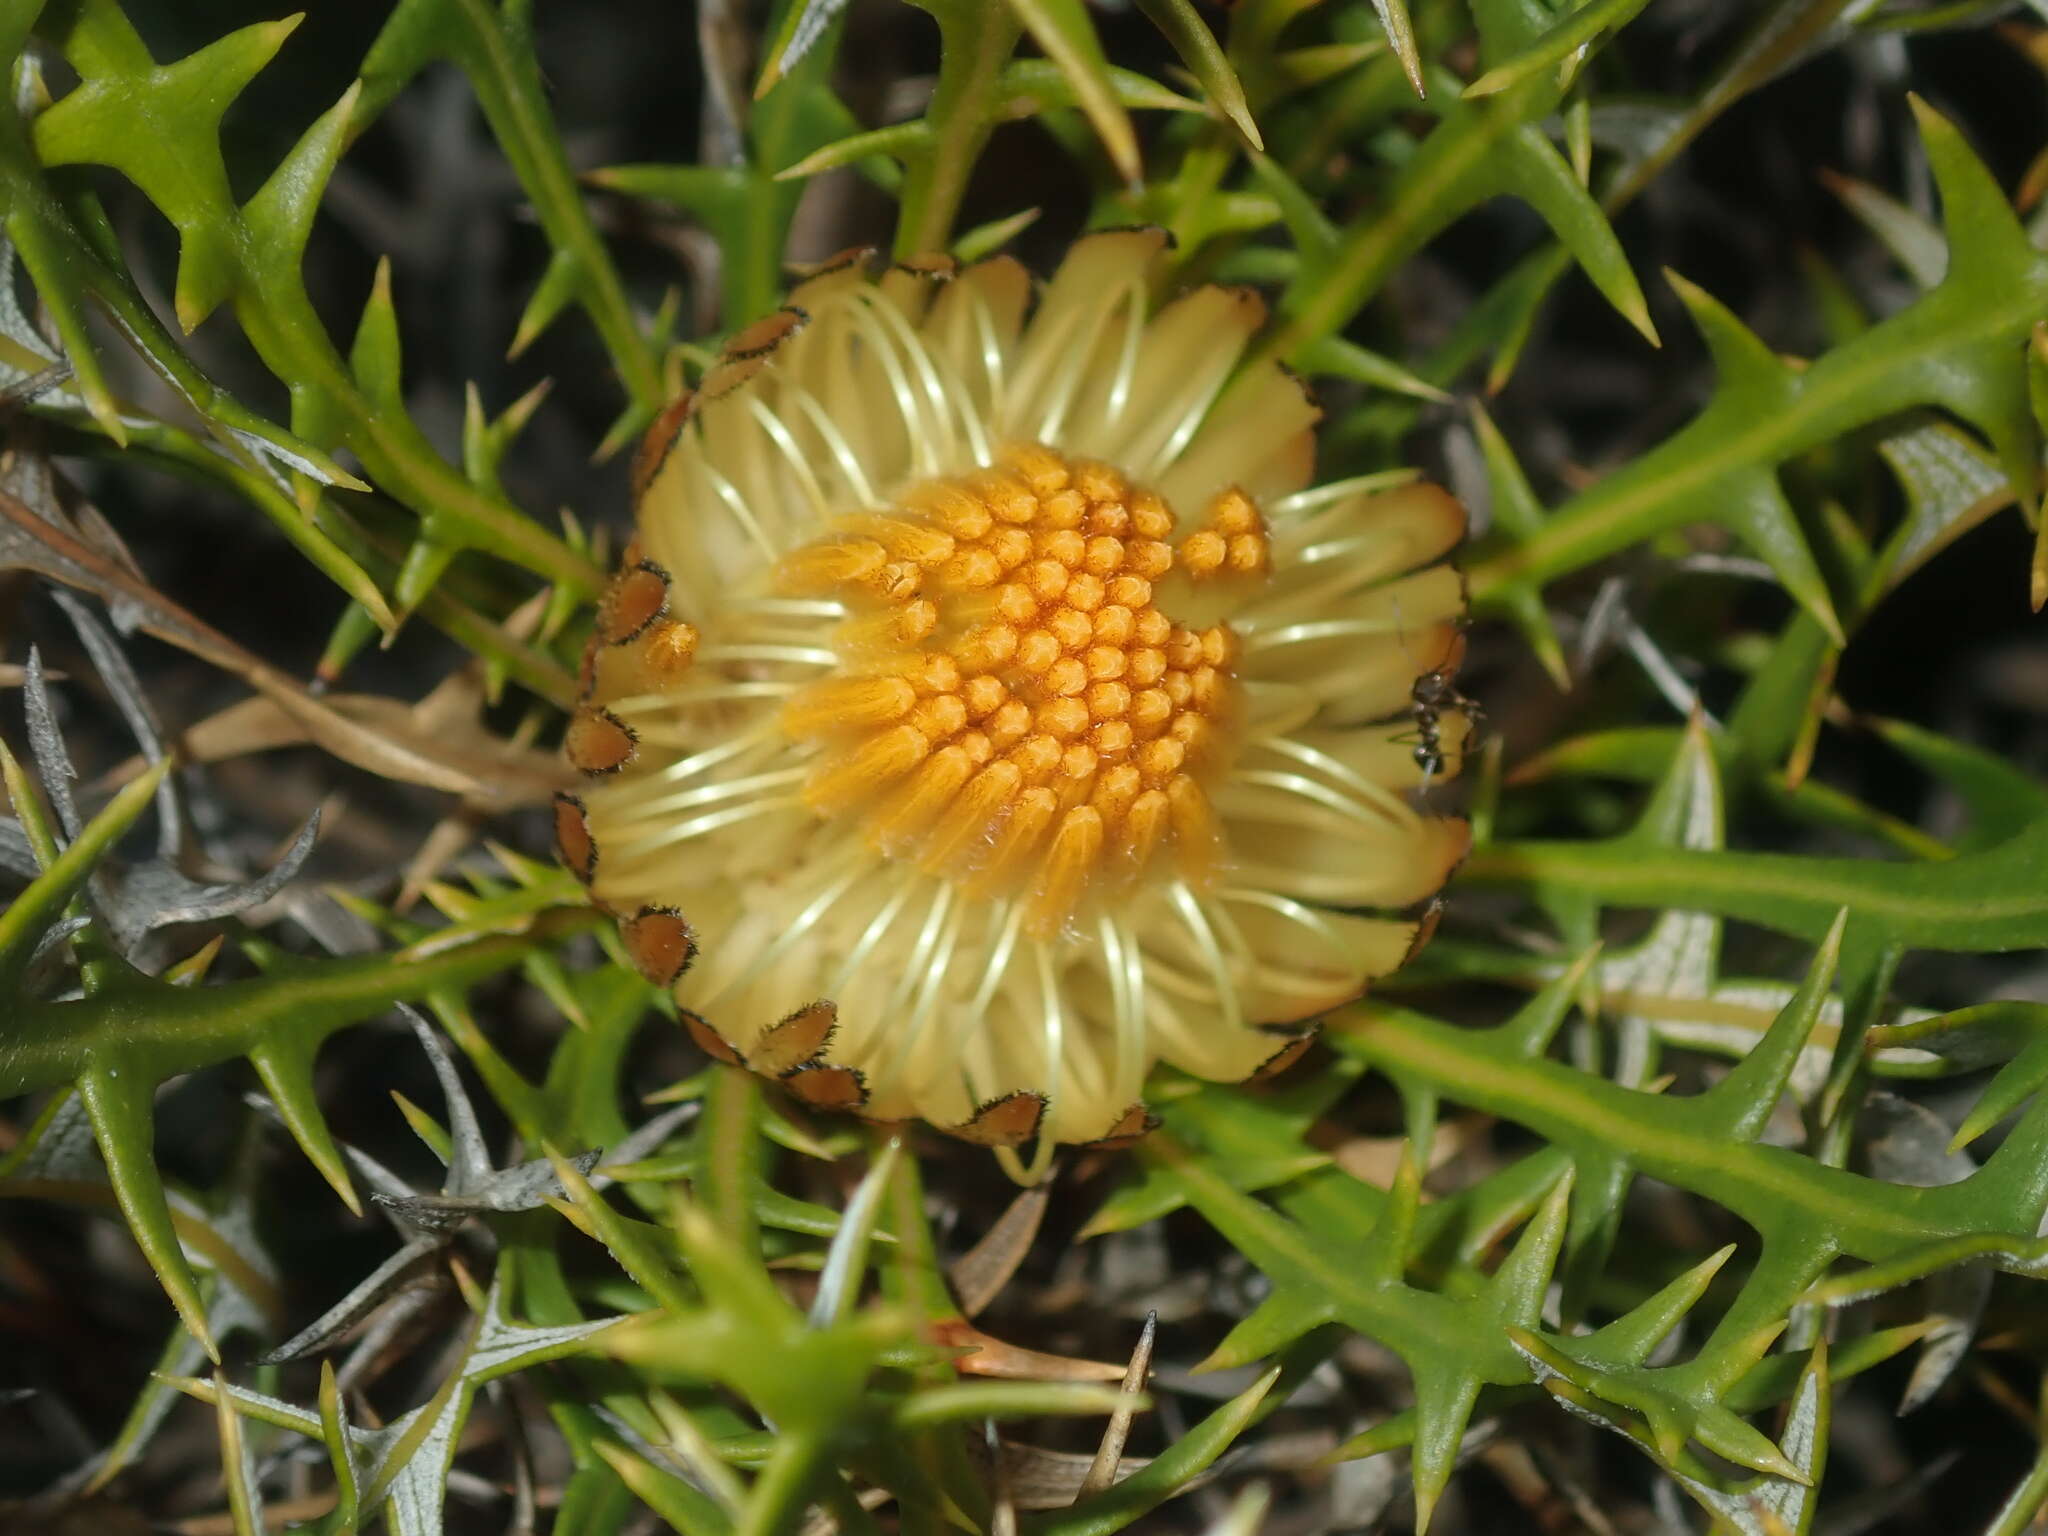 Image of Banksia borealis subsp. borealis